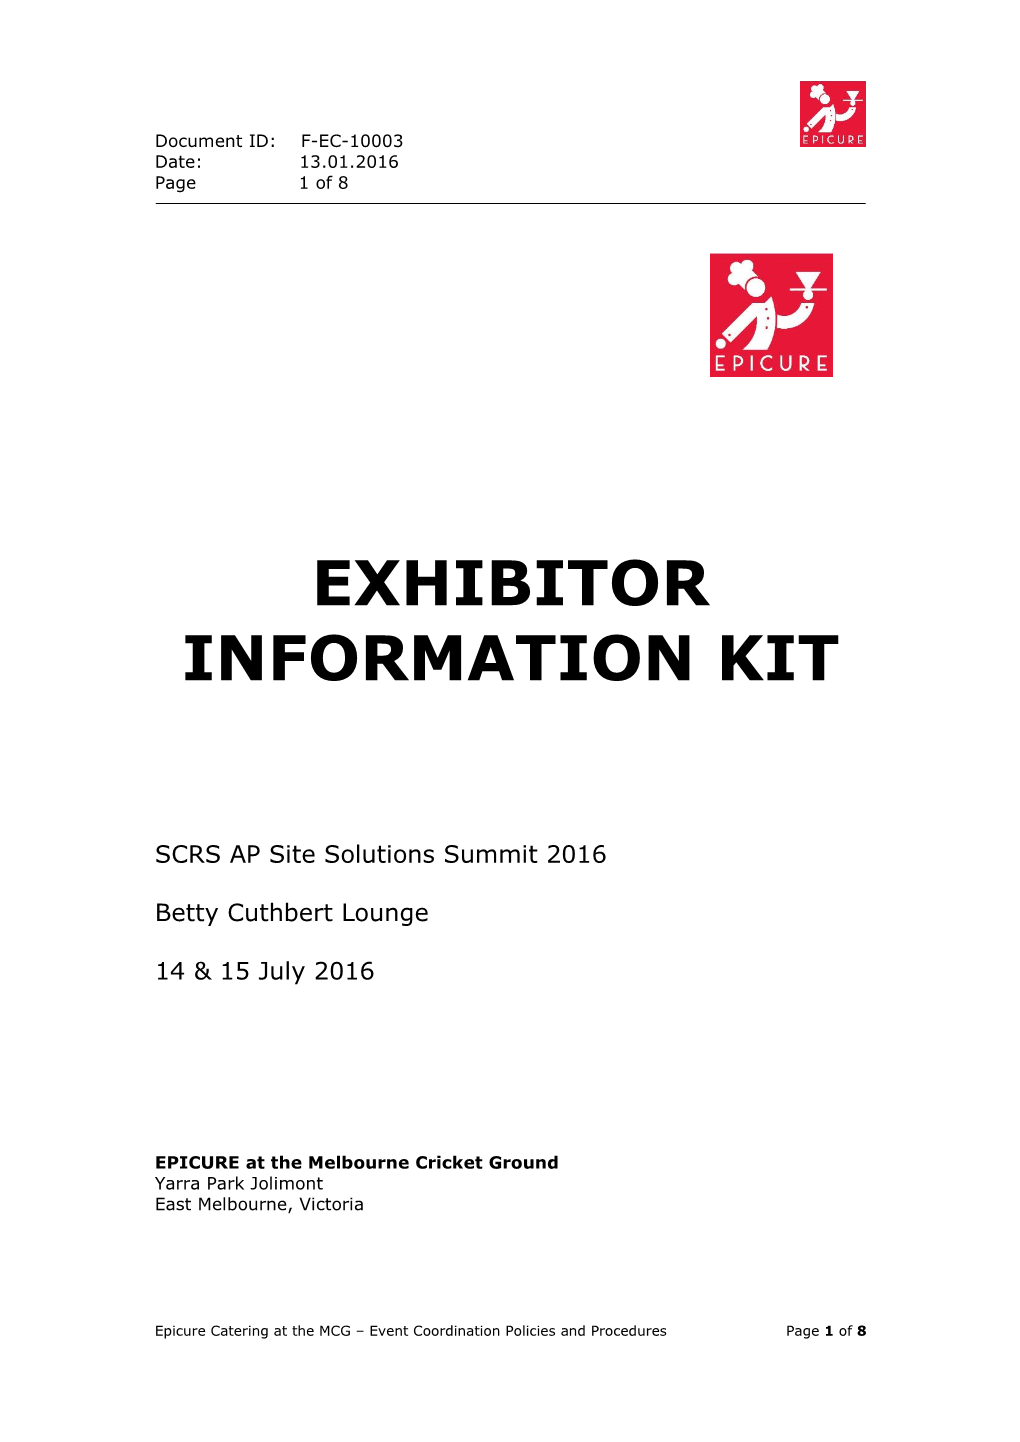 Exhibitor Information Kit